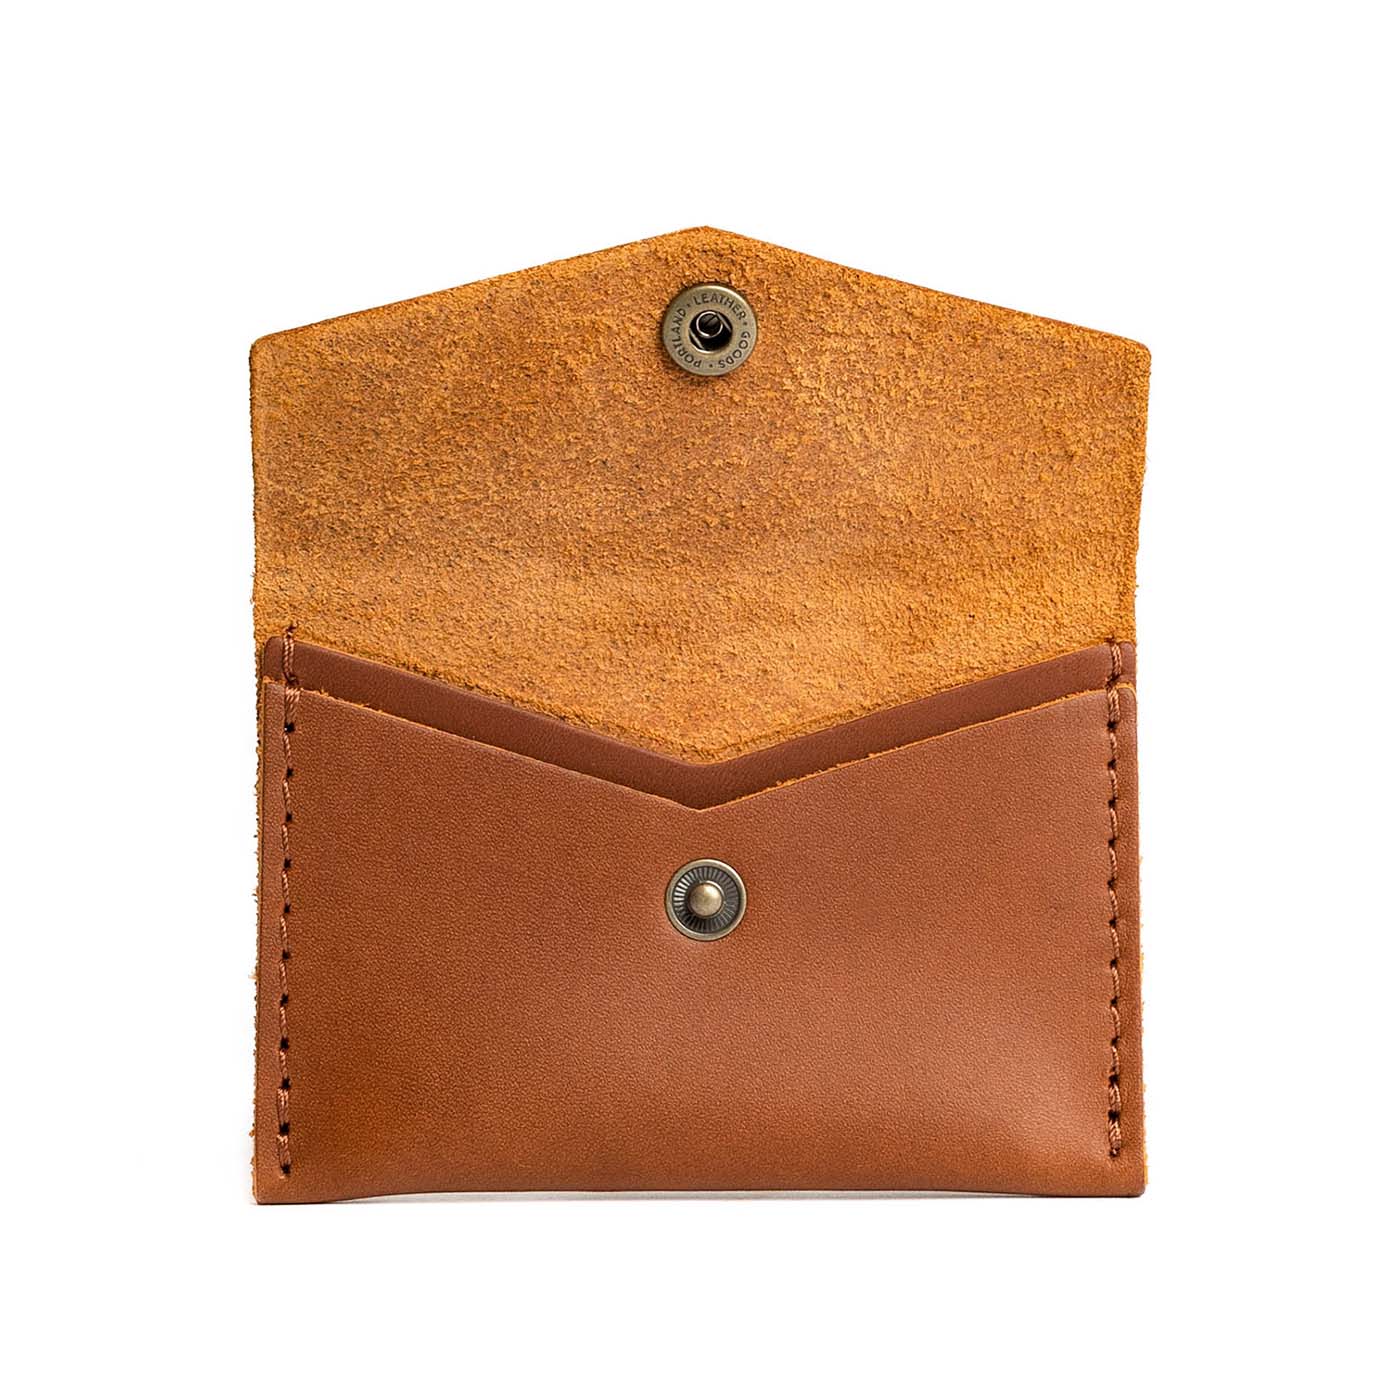 All Color: Honey | leather handmade envelope card wallet